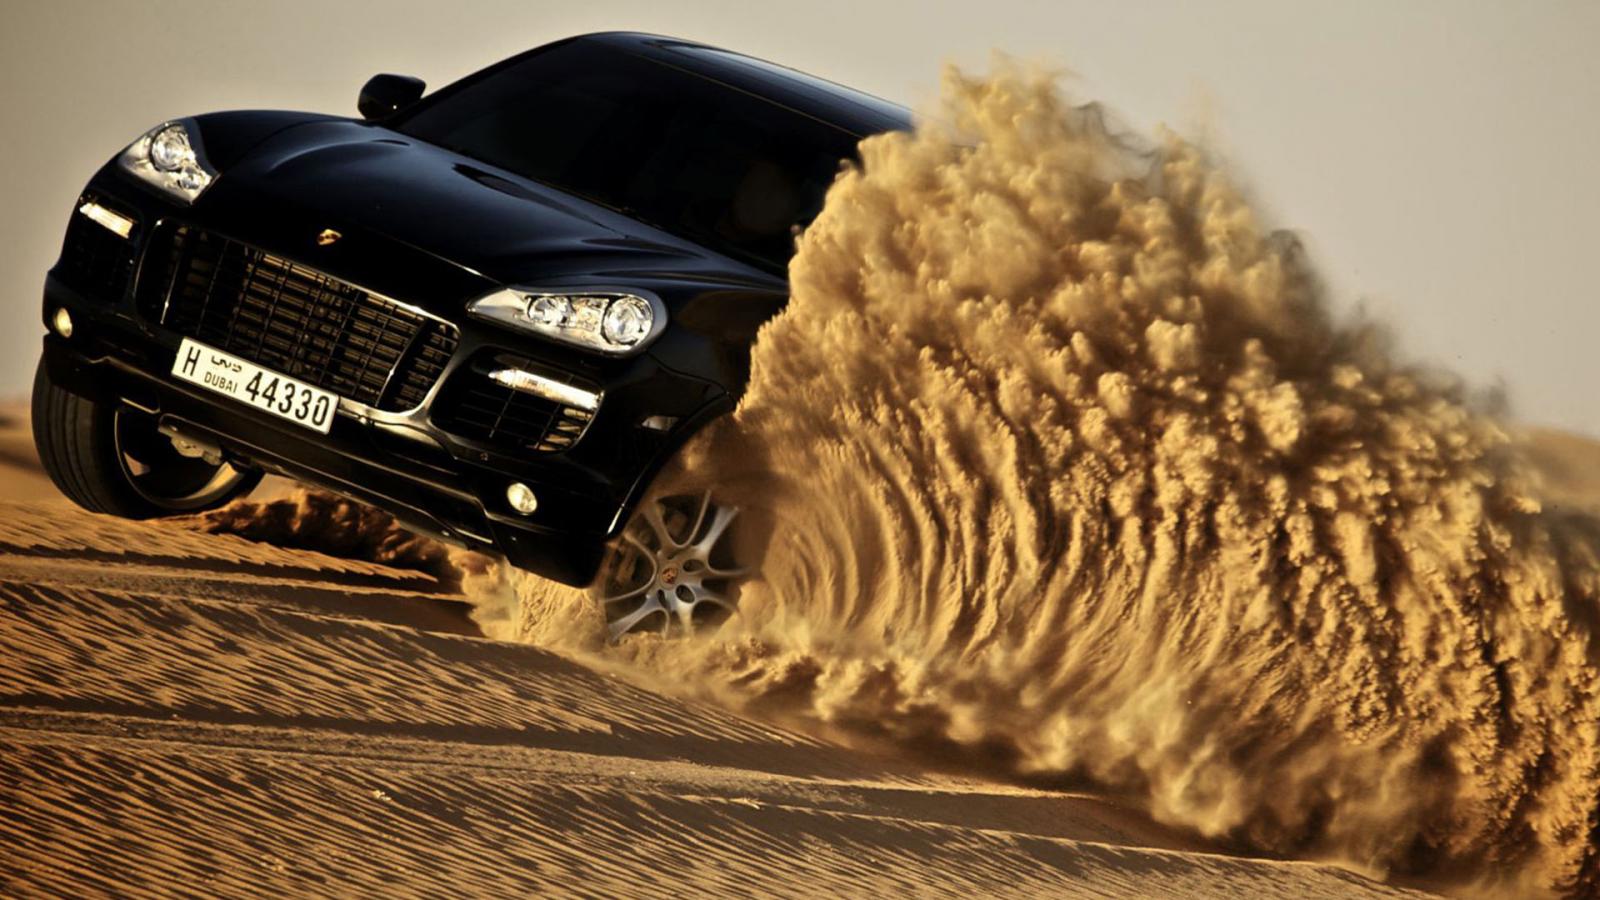 2009-Porsche-Cayenne-Turbo-S-drifting-on-sand.jpg